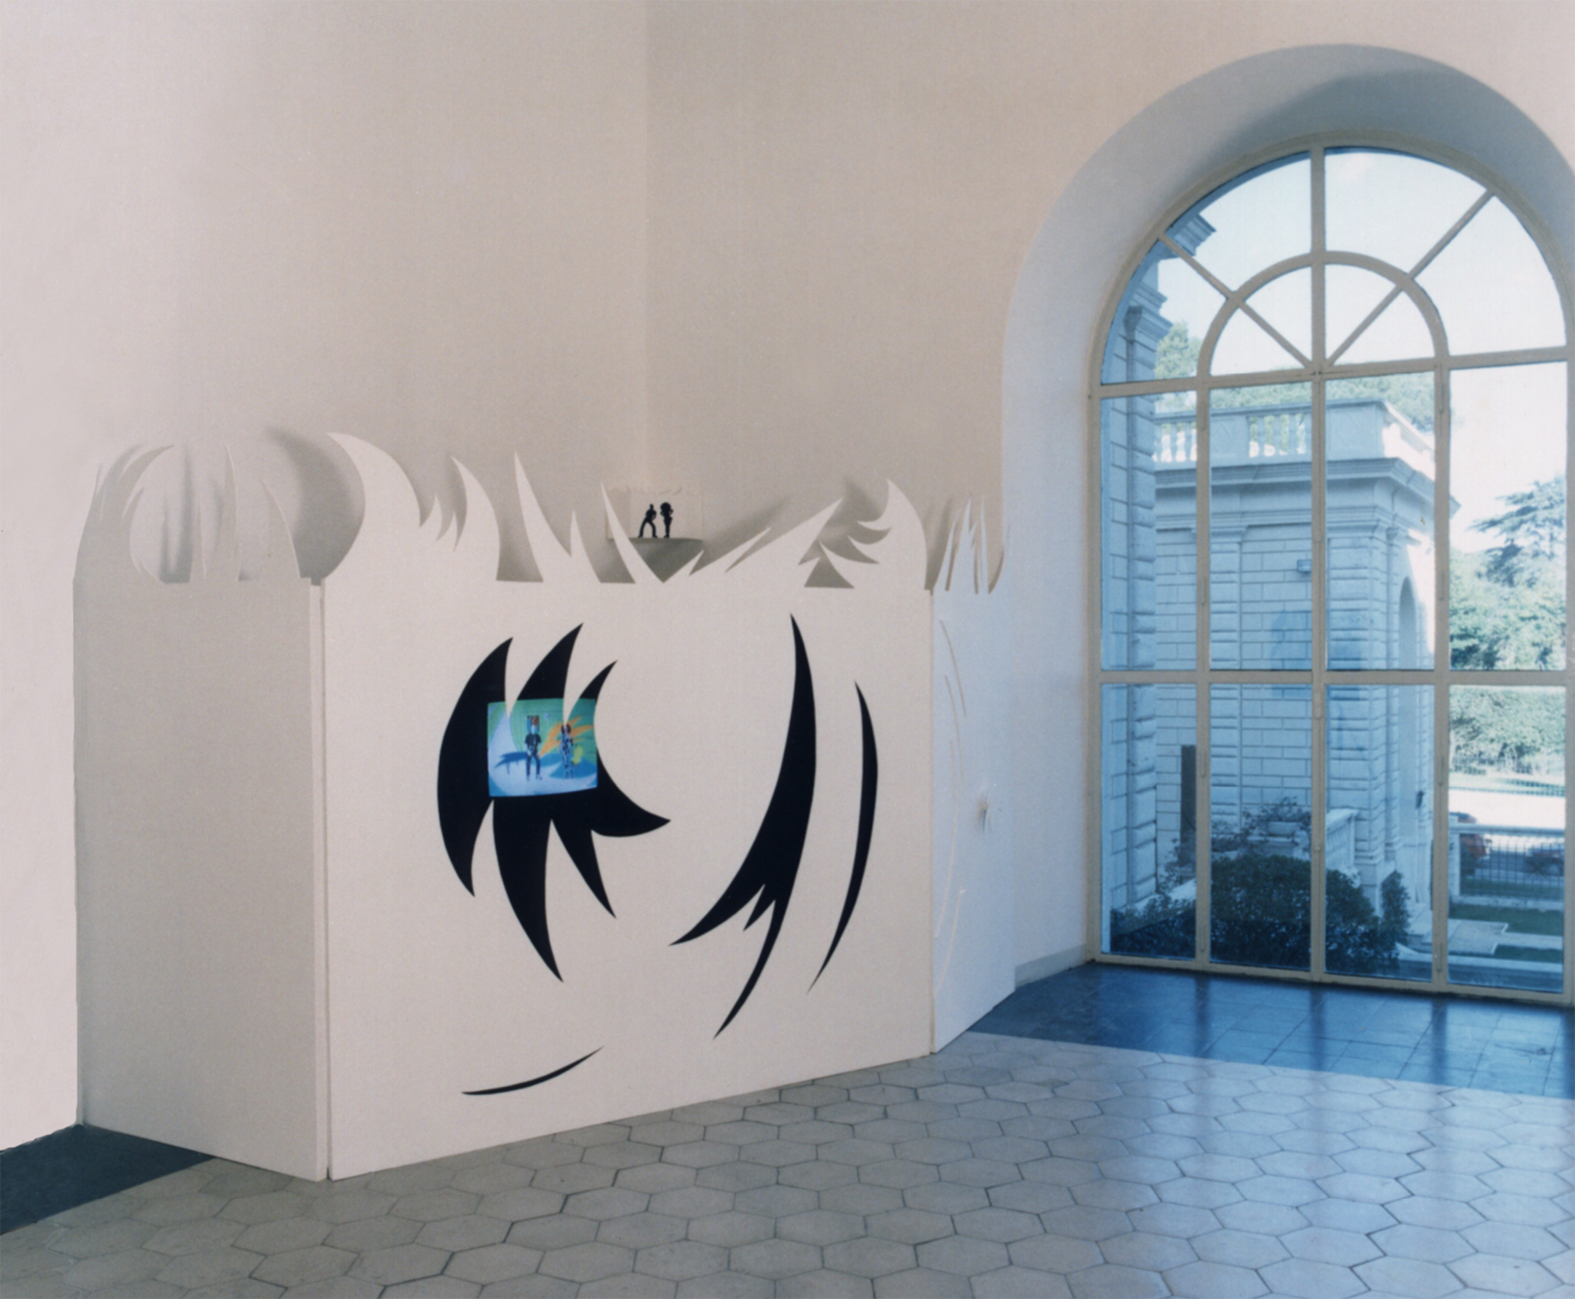 C'è una casa bianca che, Artists' Choise American Academy, Roma, 1995